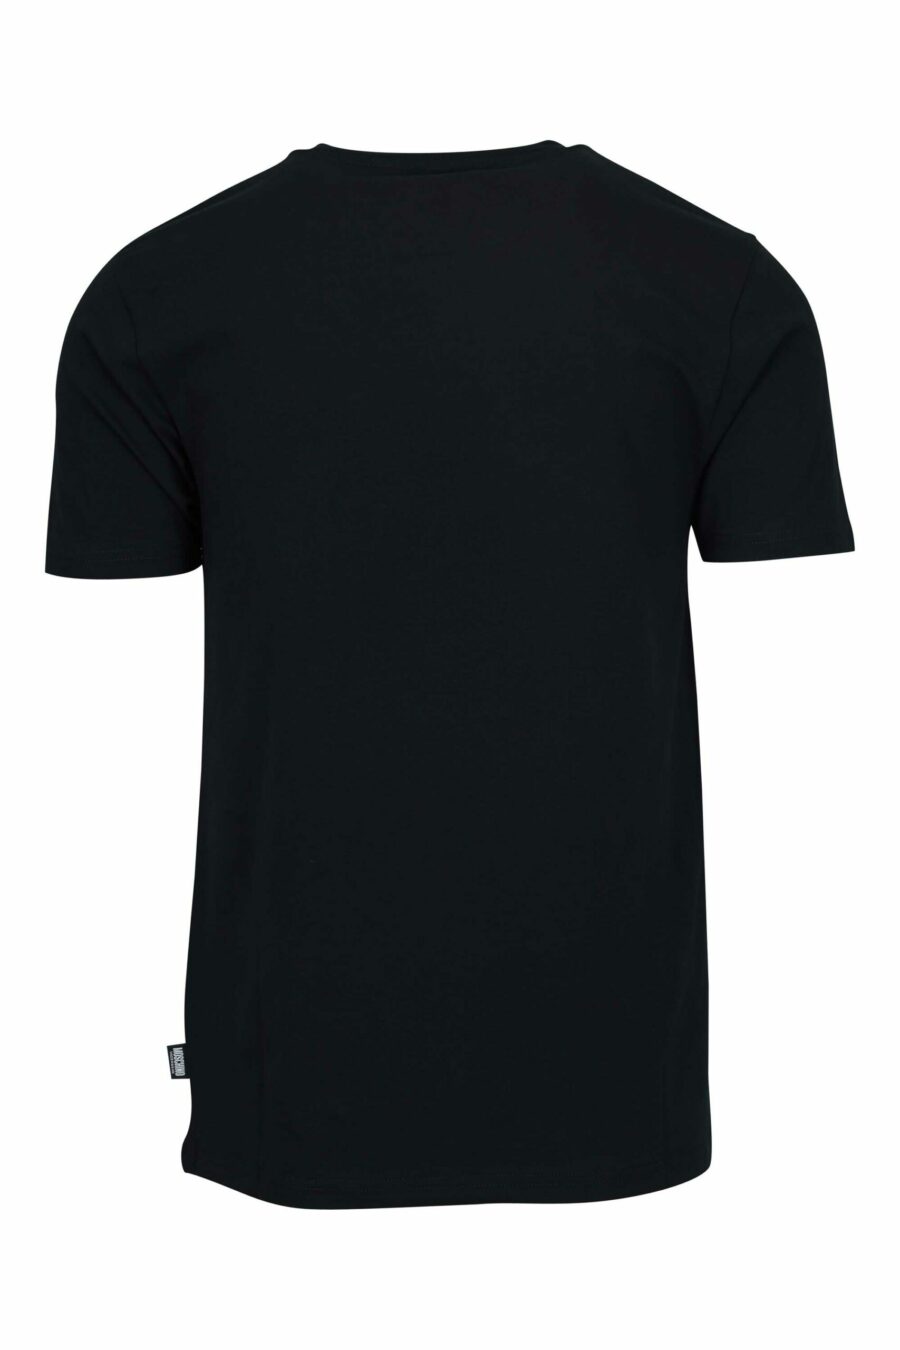 Black T-shirt with mini logo bear patch "underbear" - 667113605739 1 scaled